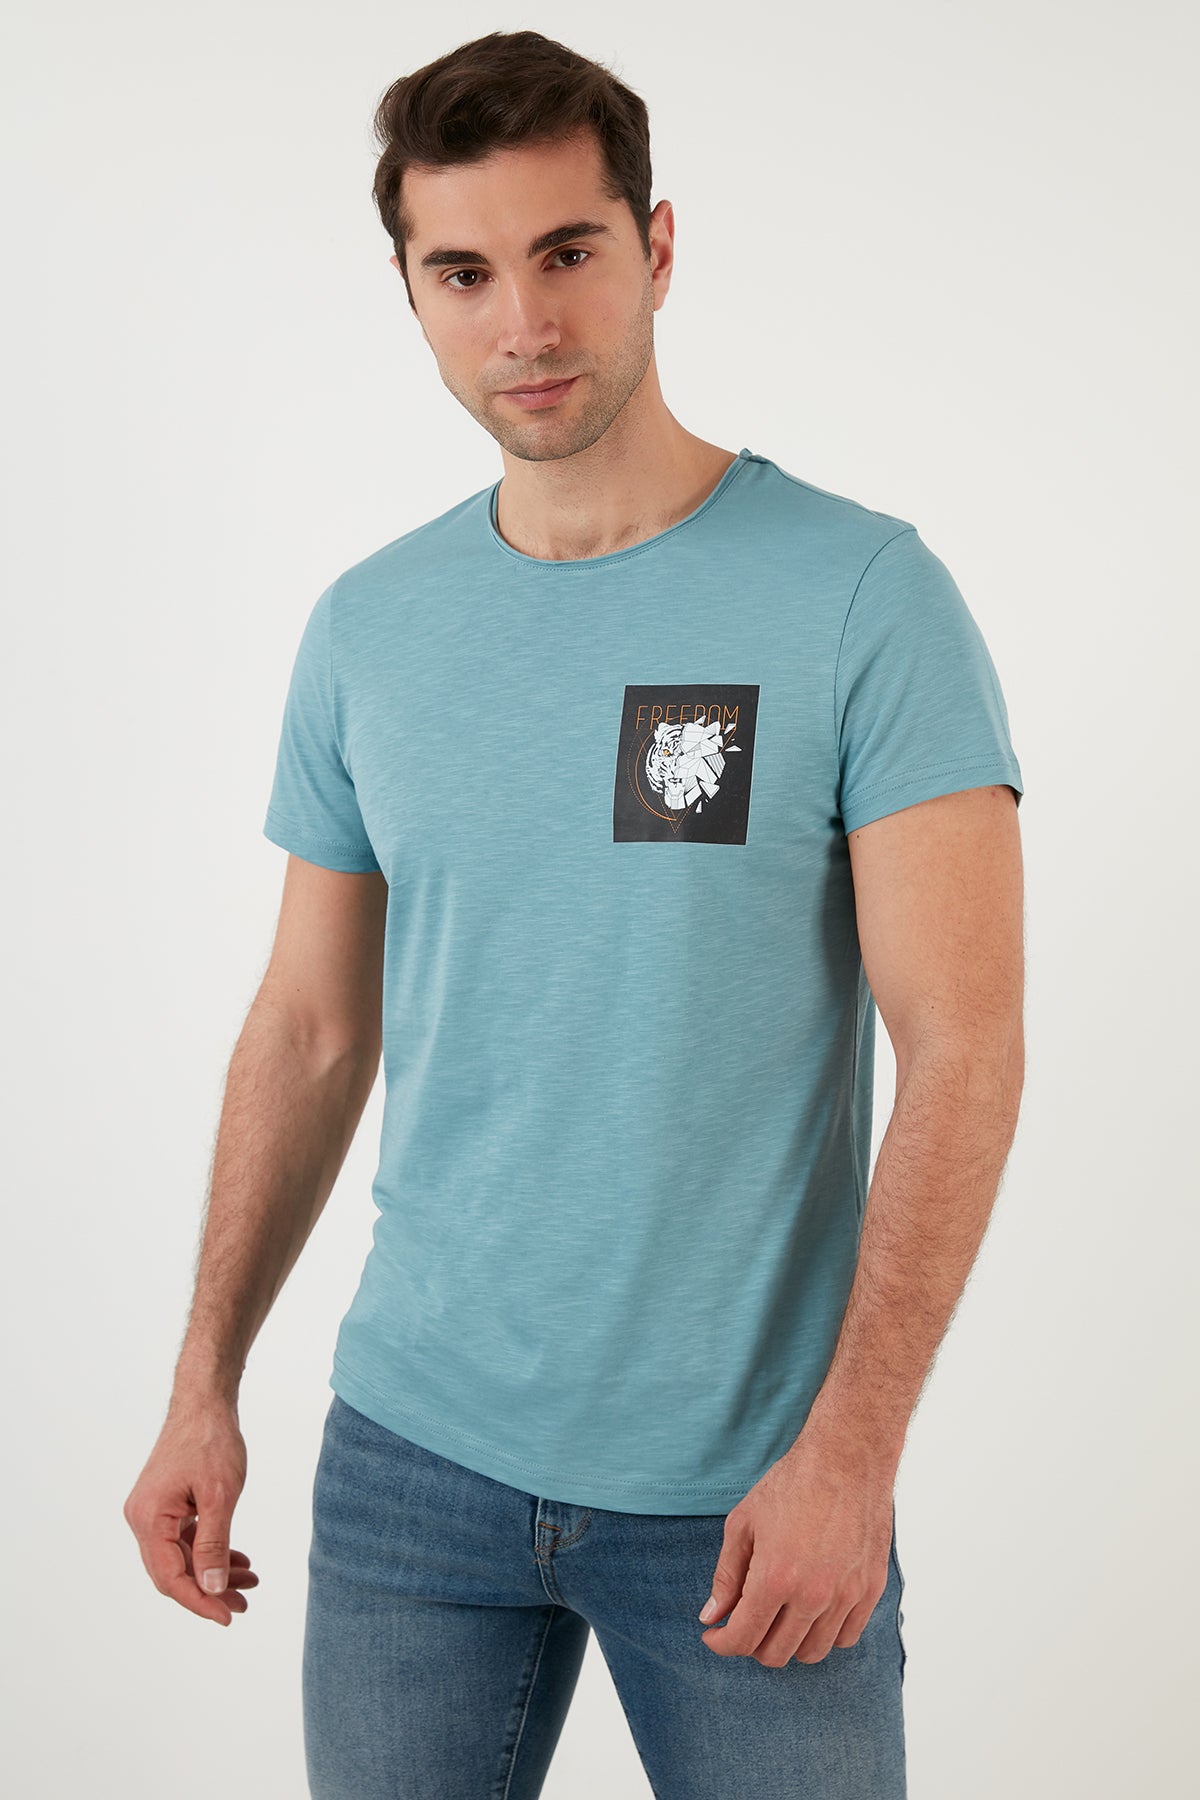 Buratti Slim Fit Printed Crew Neck 100% Cotton Men's T Shirt - LIGHT BLUE